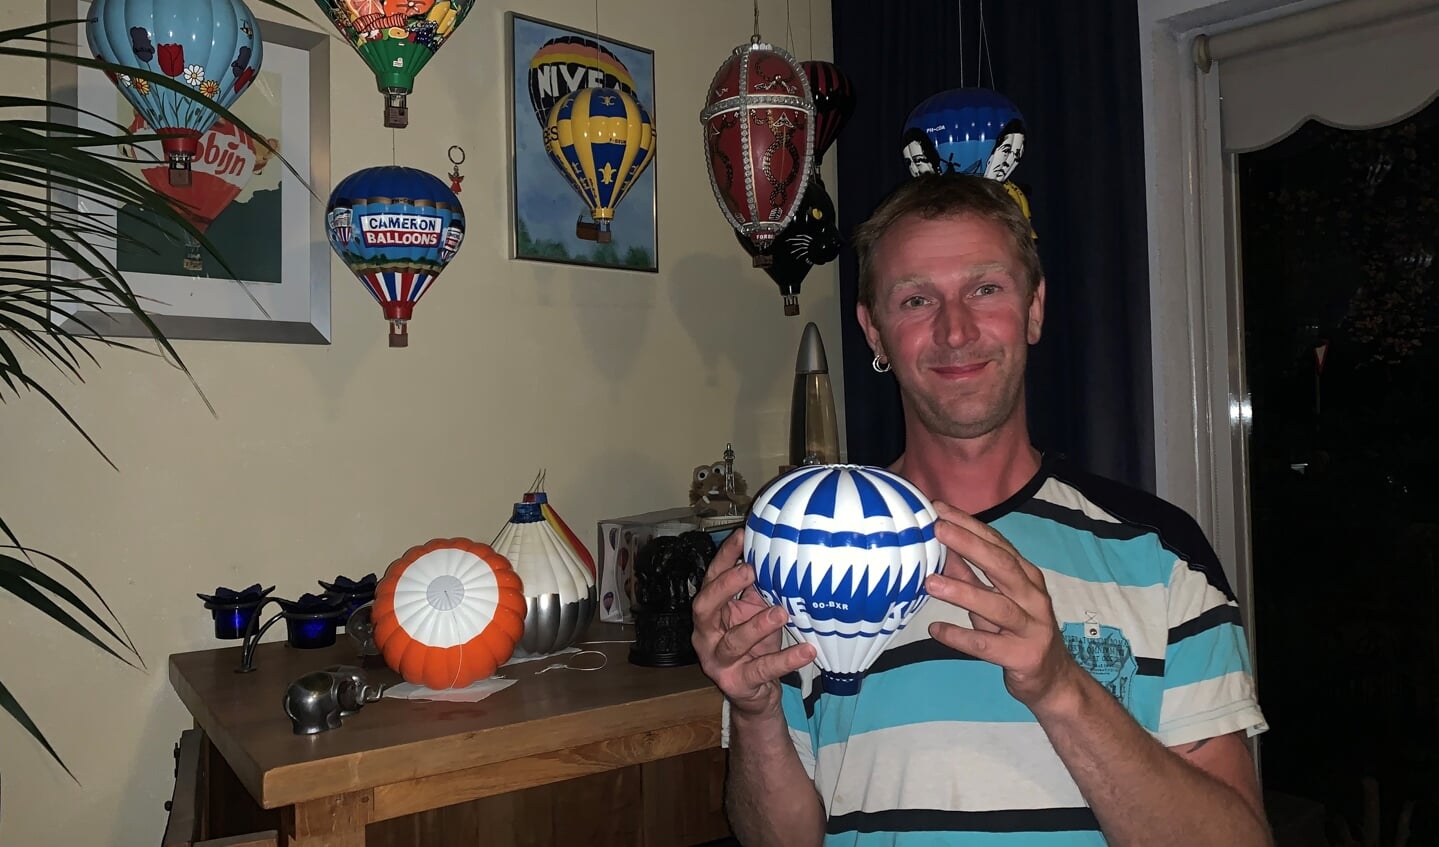 Ballonliefhebber Jan Vermeulen heeft thuis zo'n vijftig miniatuur ballonnen hangen.